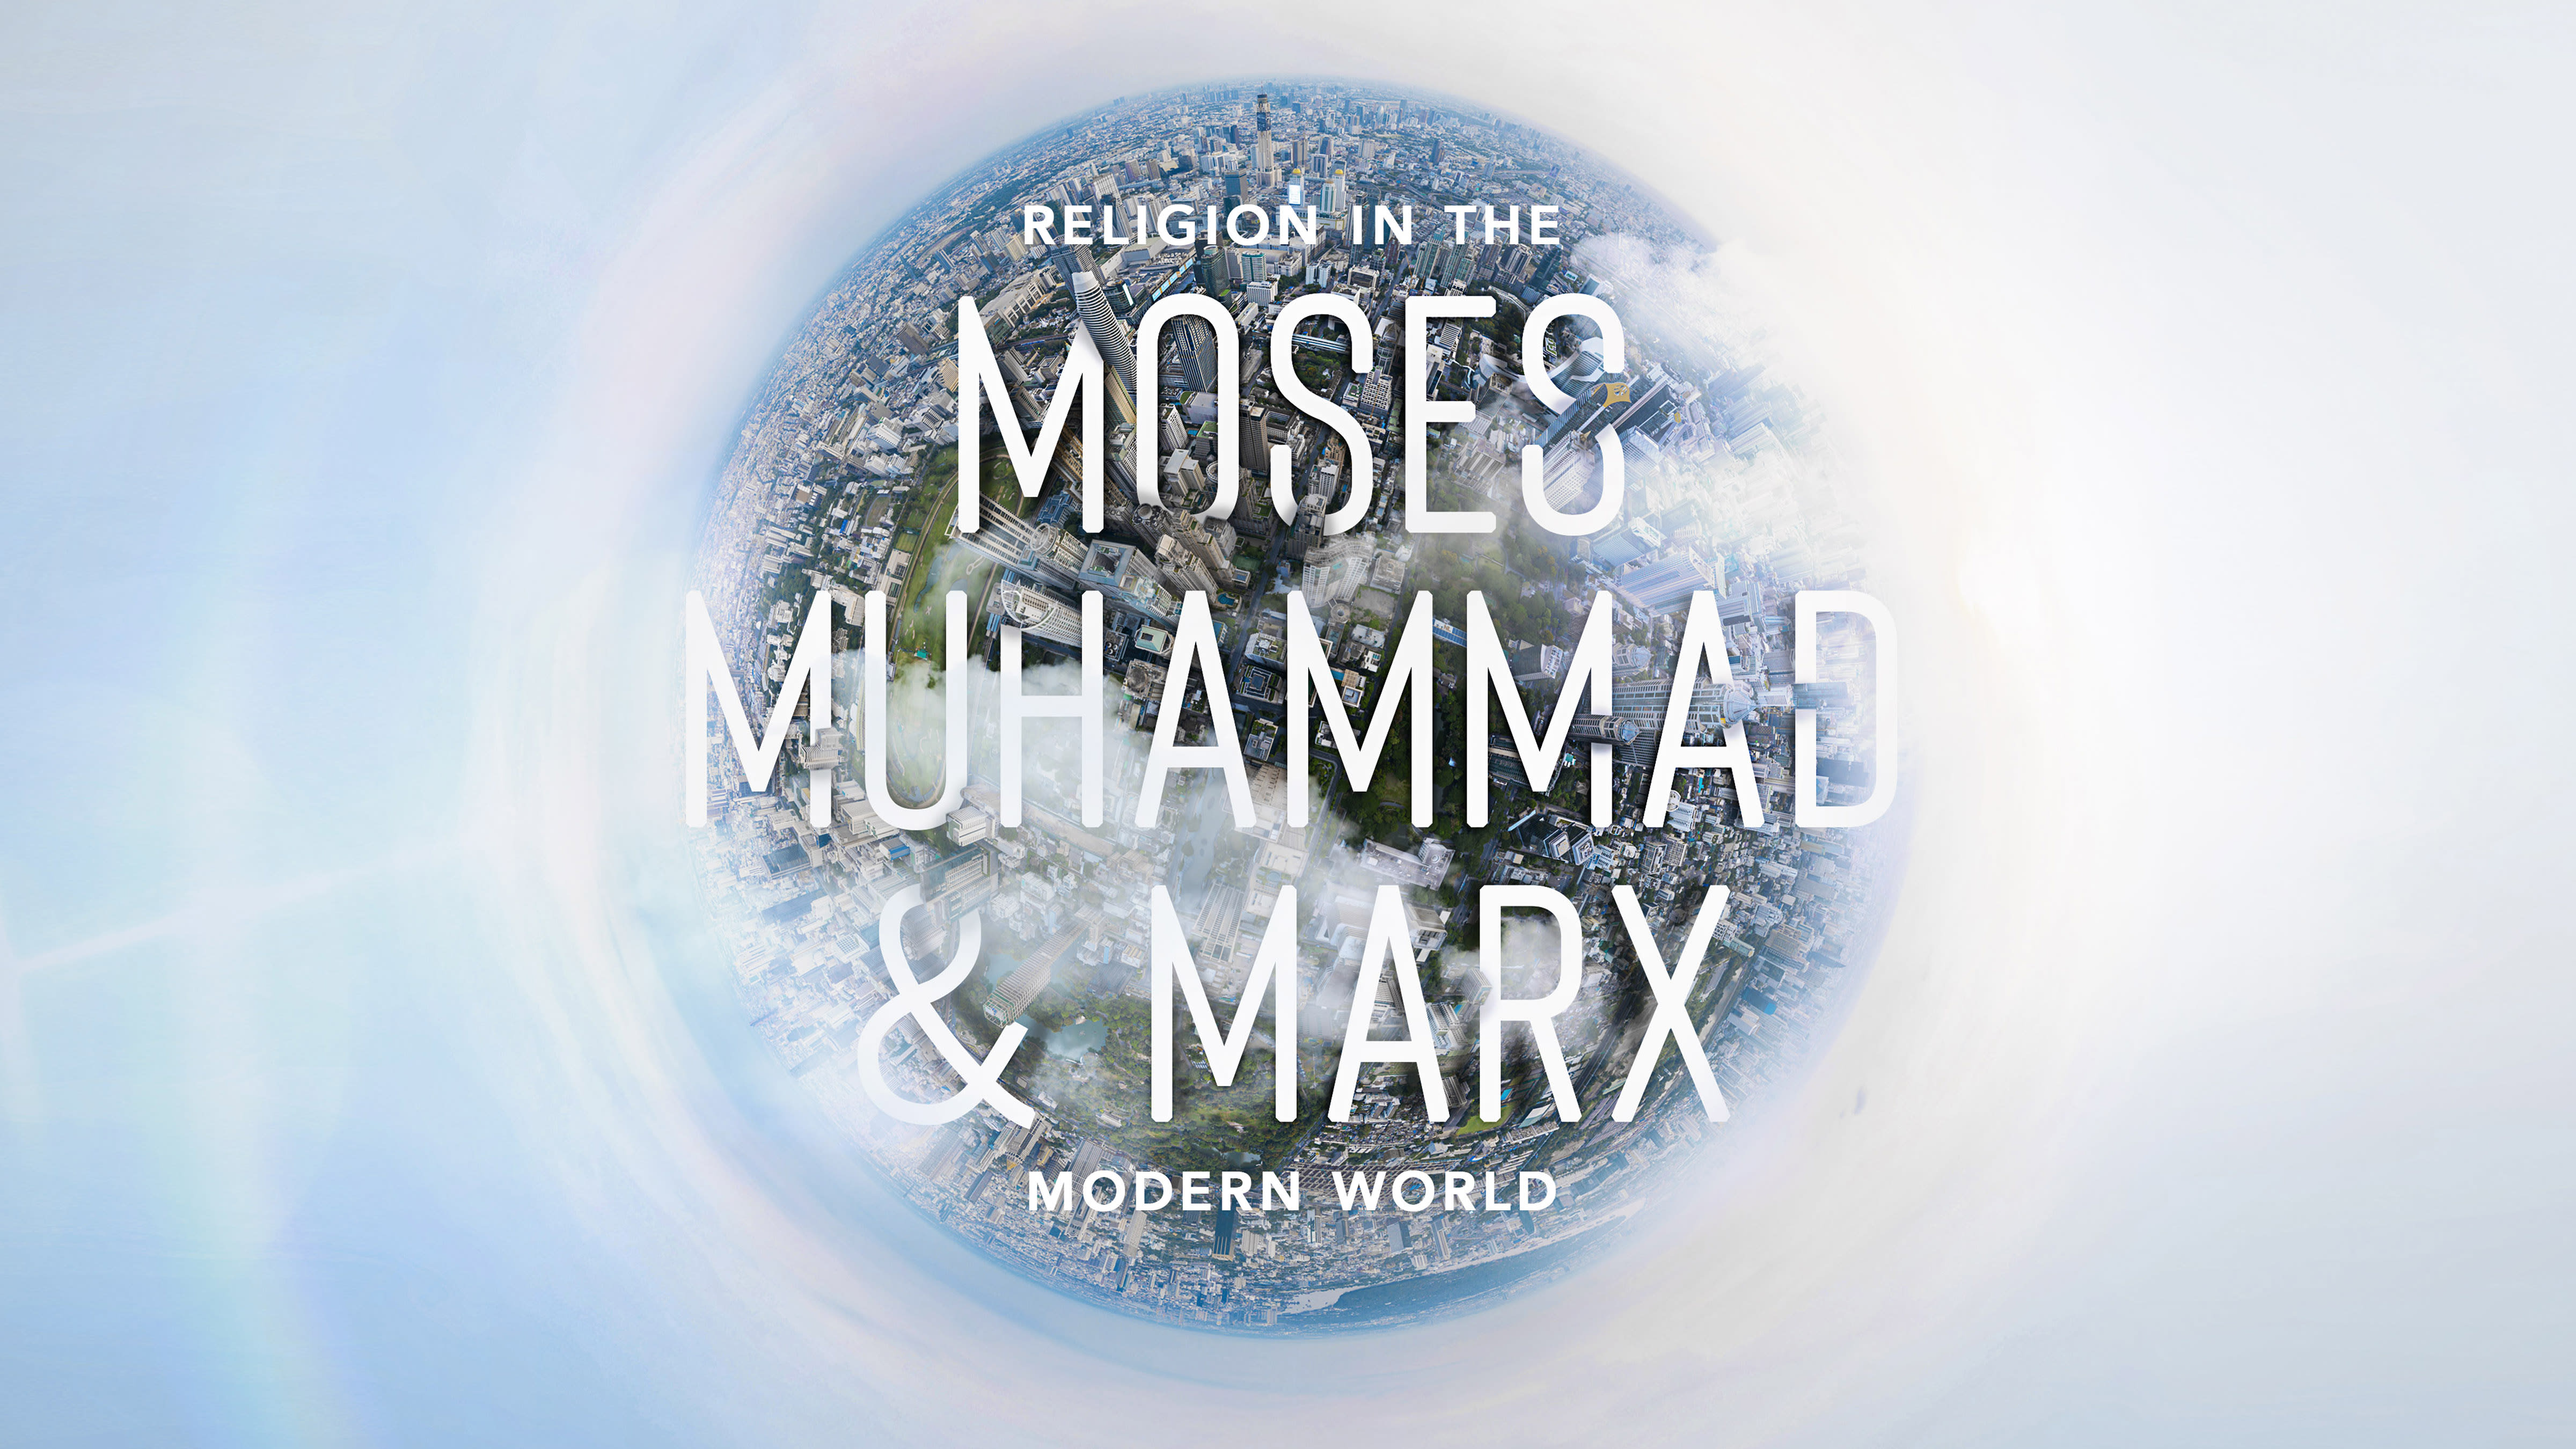 MOSES, MUHAMMAD, AND MARX